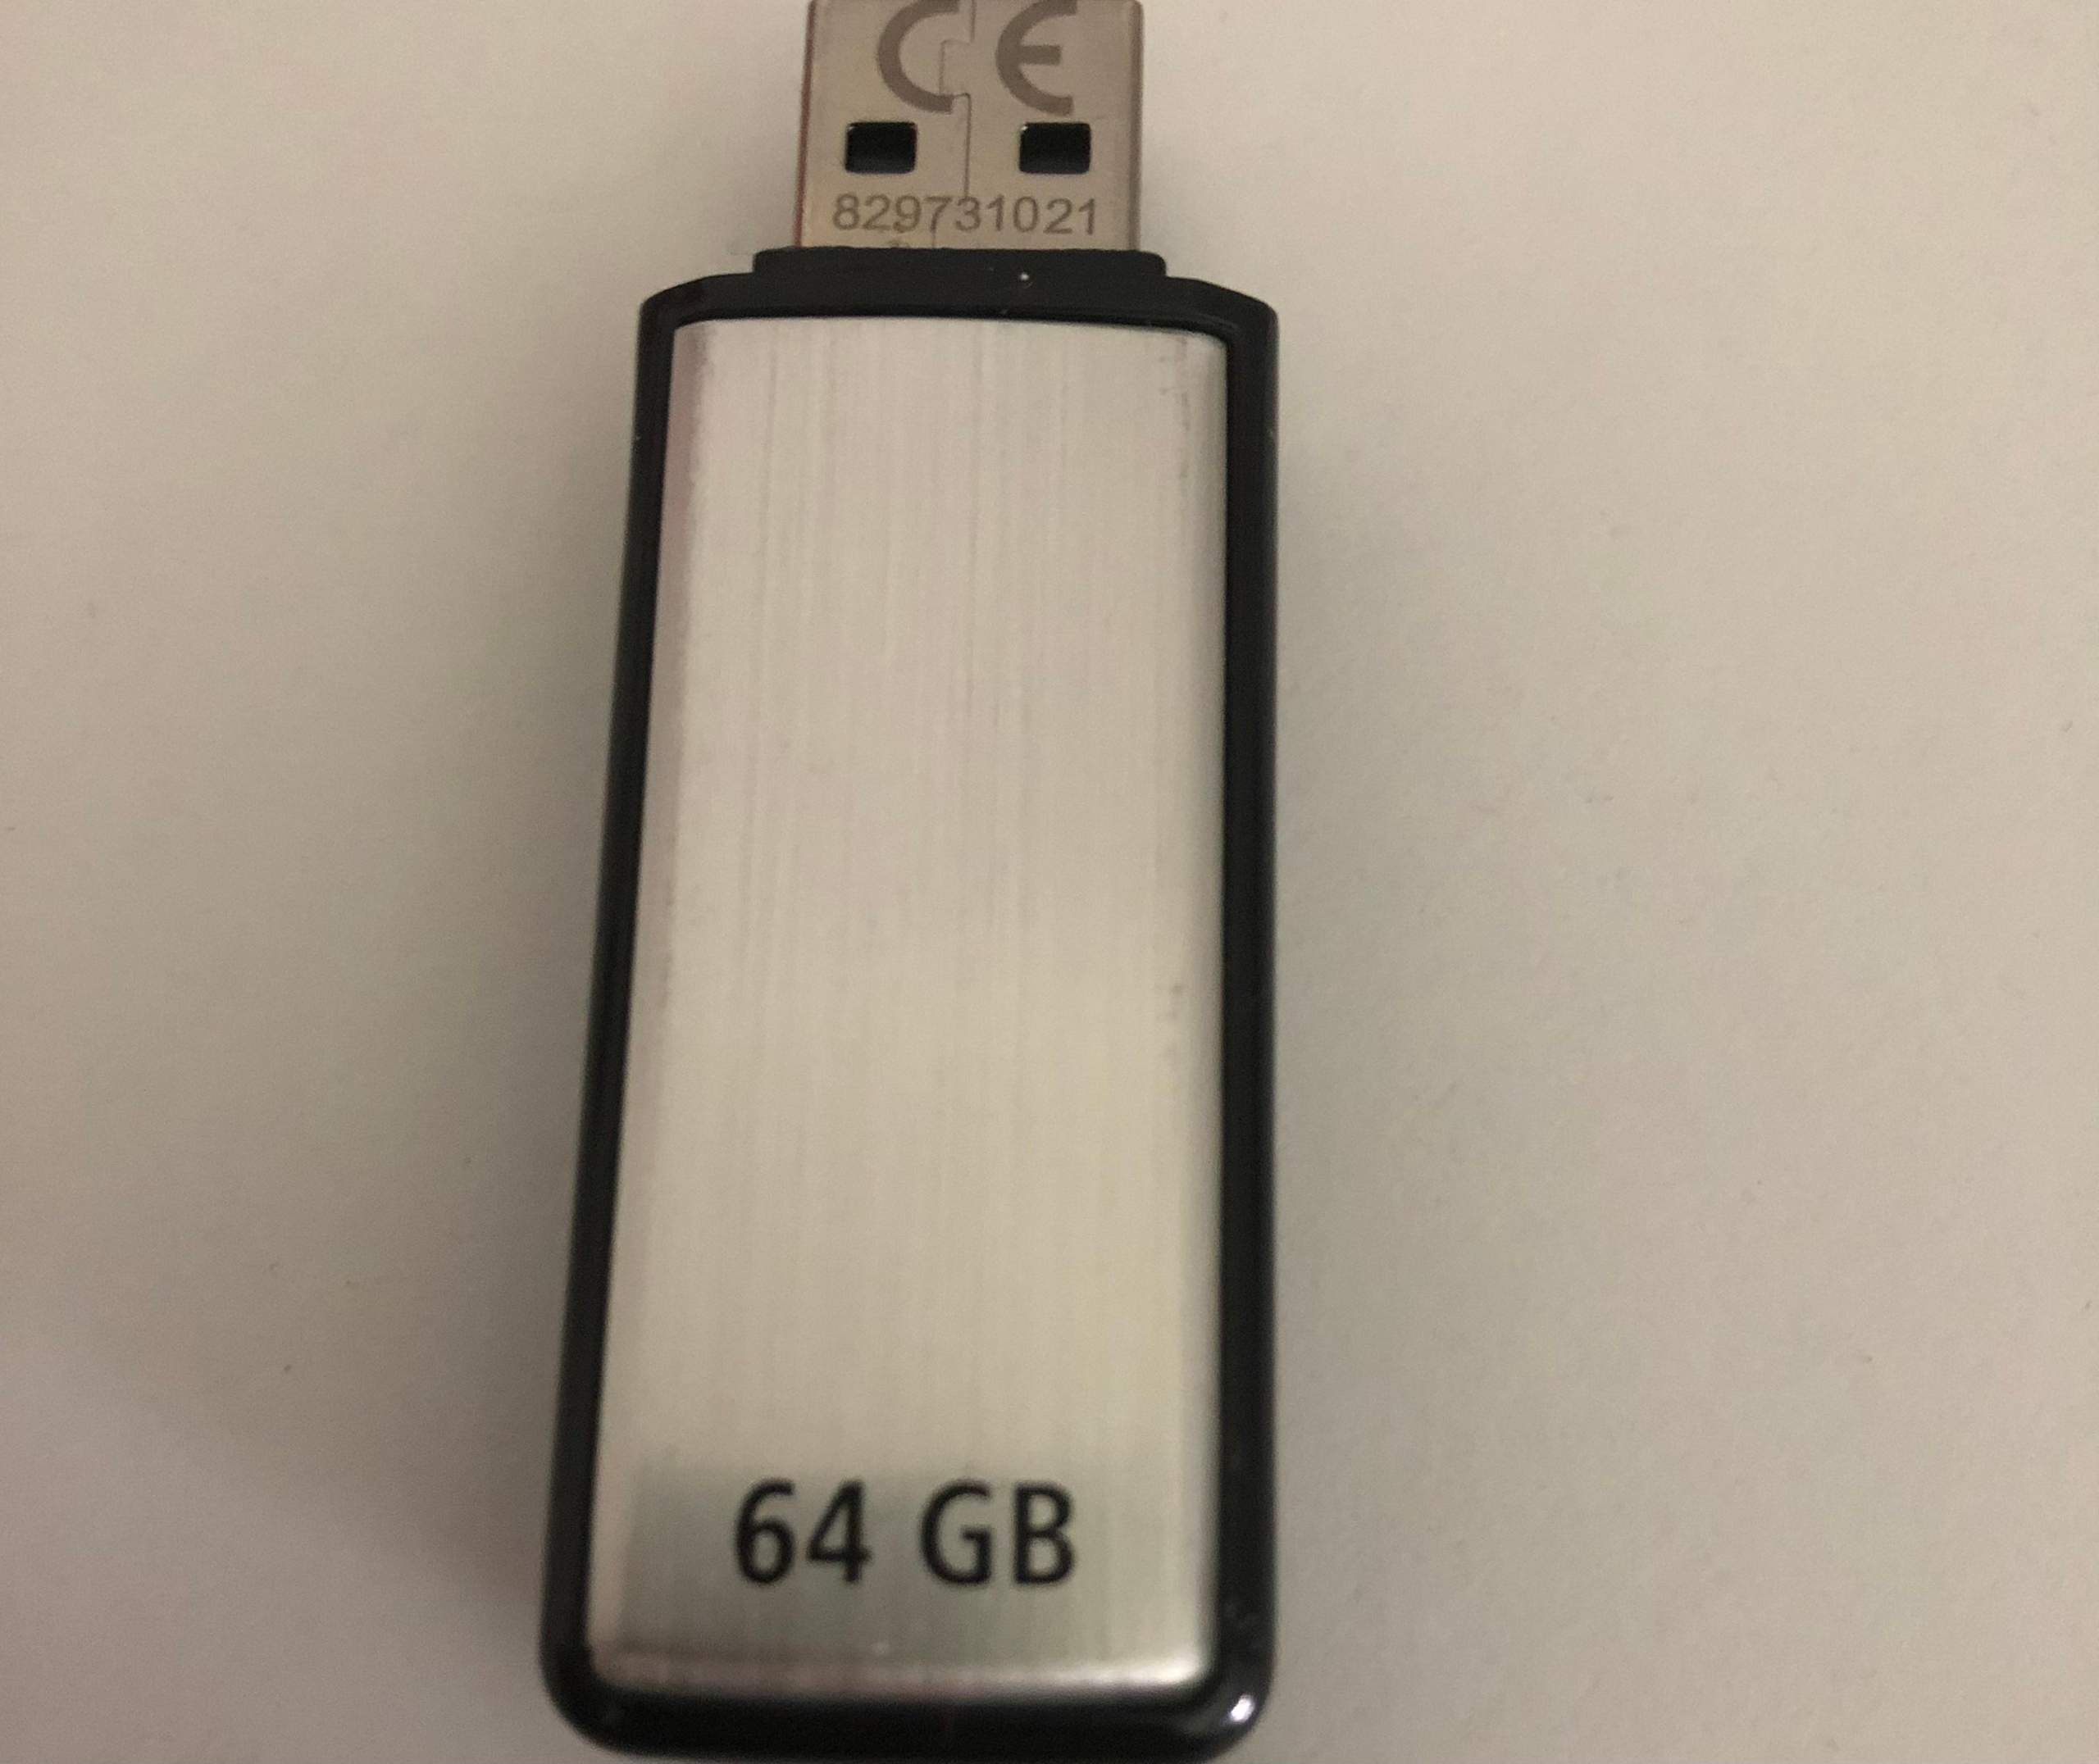 GB USB-Stick aber nur GB Speicherkapazität? Technik, PC)